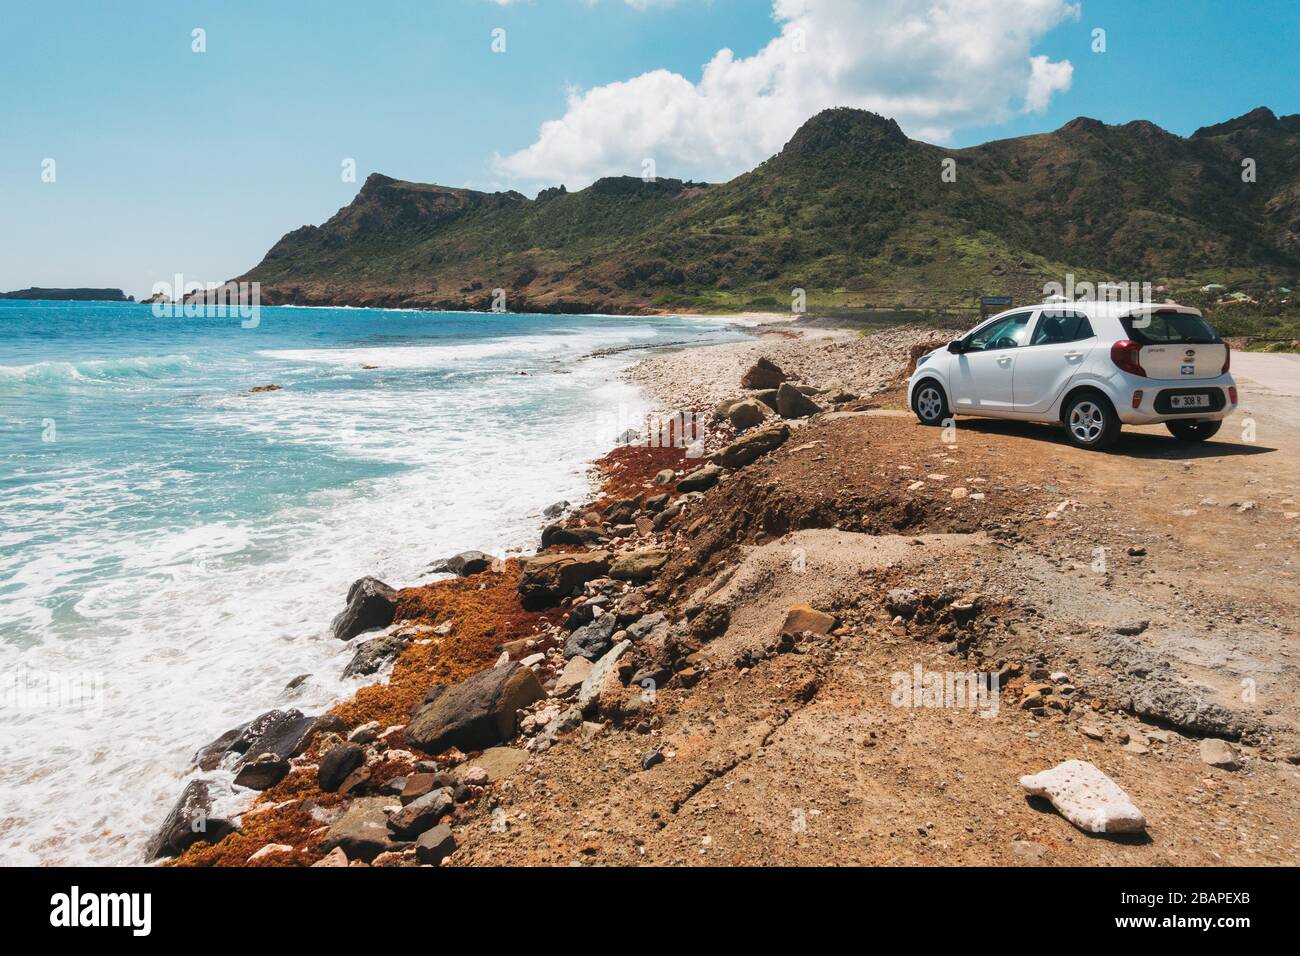 A compact rental car parked on the coast of Anse de Grand Fond, St Barthélemy Stock Photo